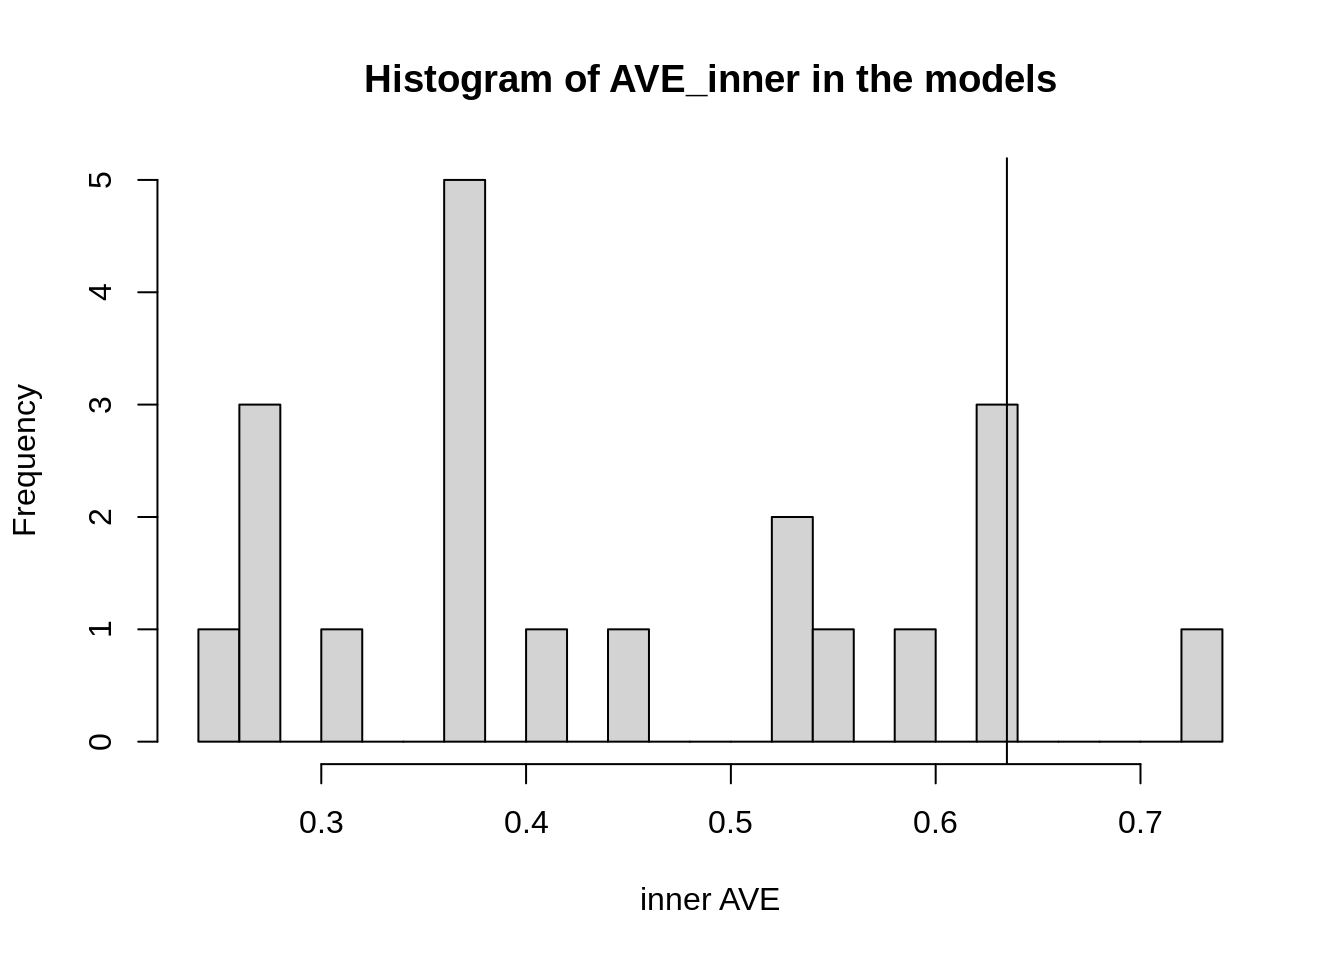 Figure 1: Histogram of the different inner AVE values of each model.